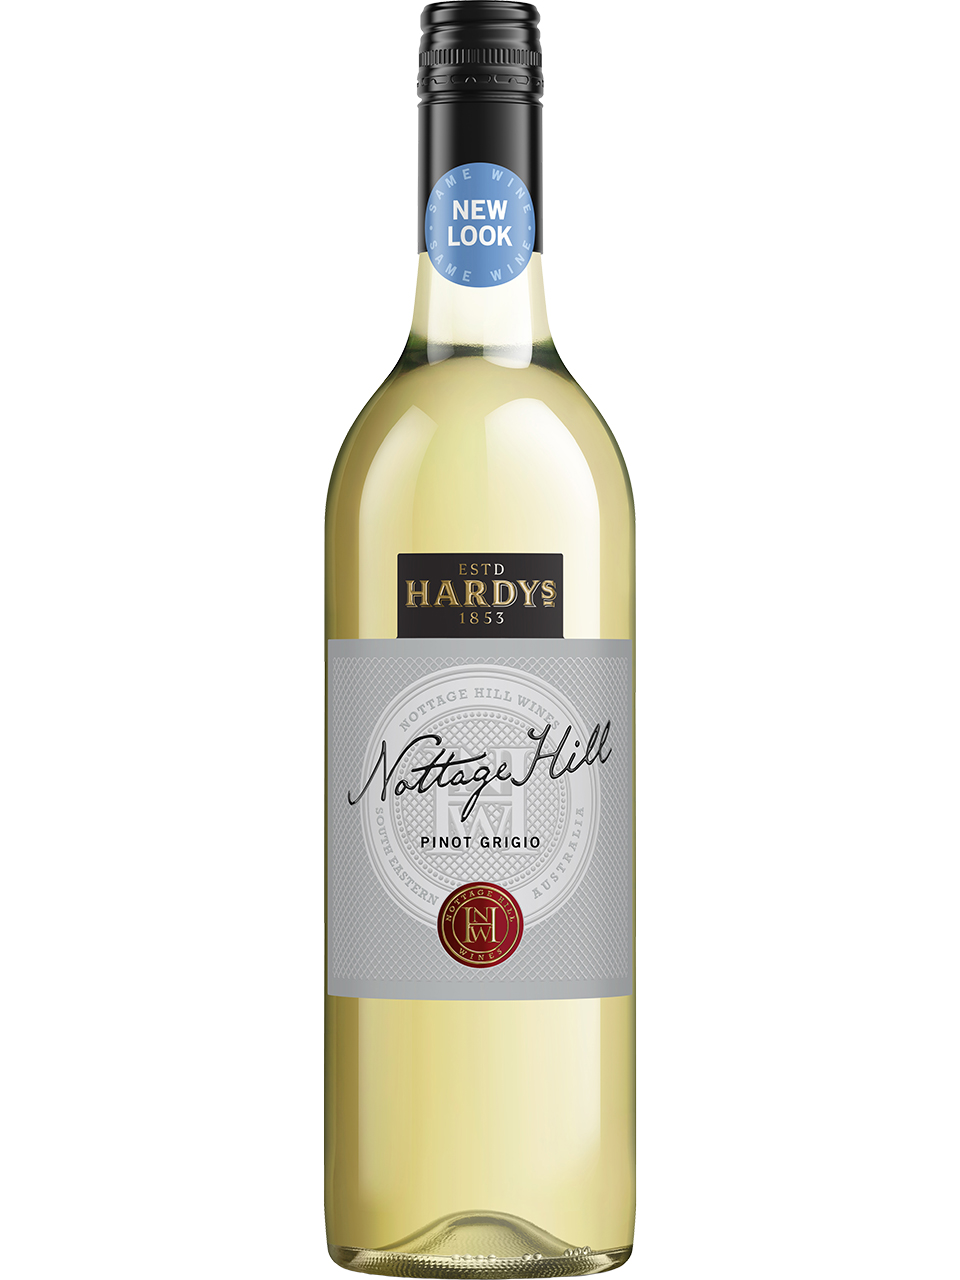 Hardys Nottage Hill Pinot Grigio